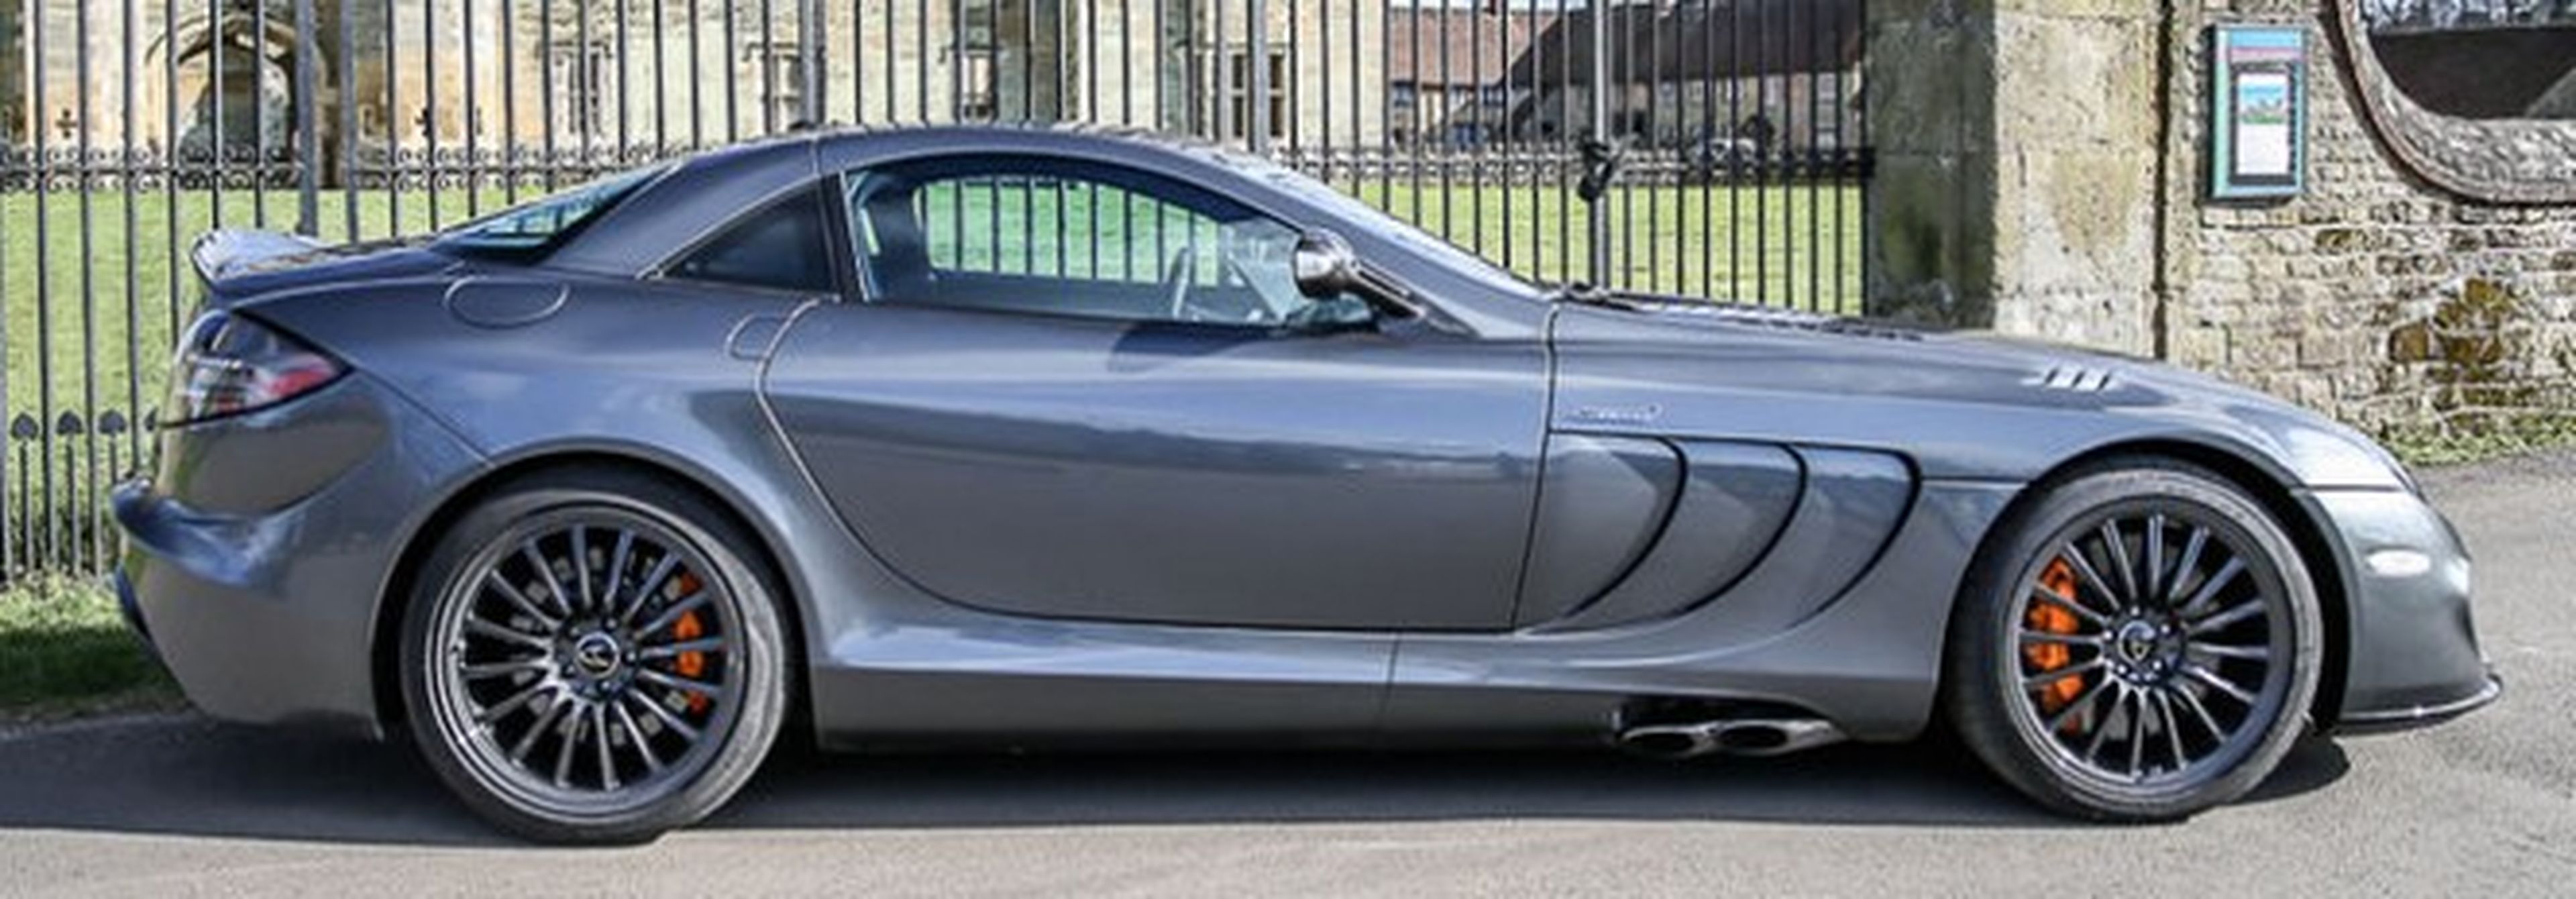 Diez millones de euros por este Mercedes SLR, ¿locura?